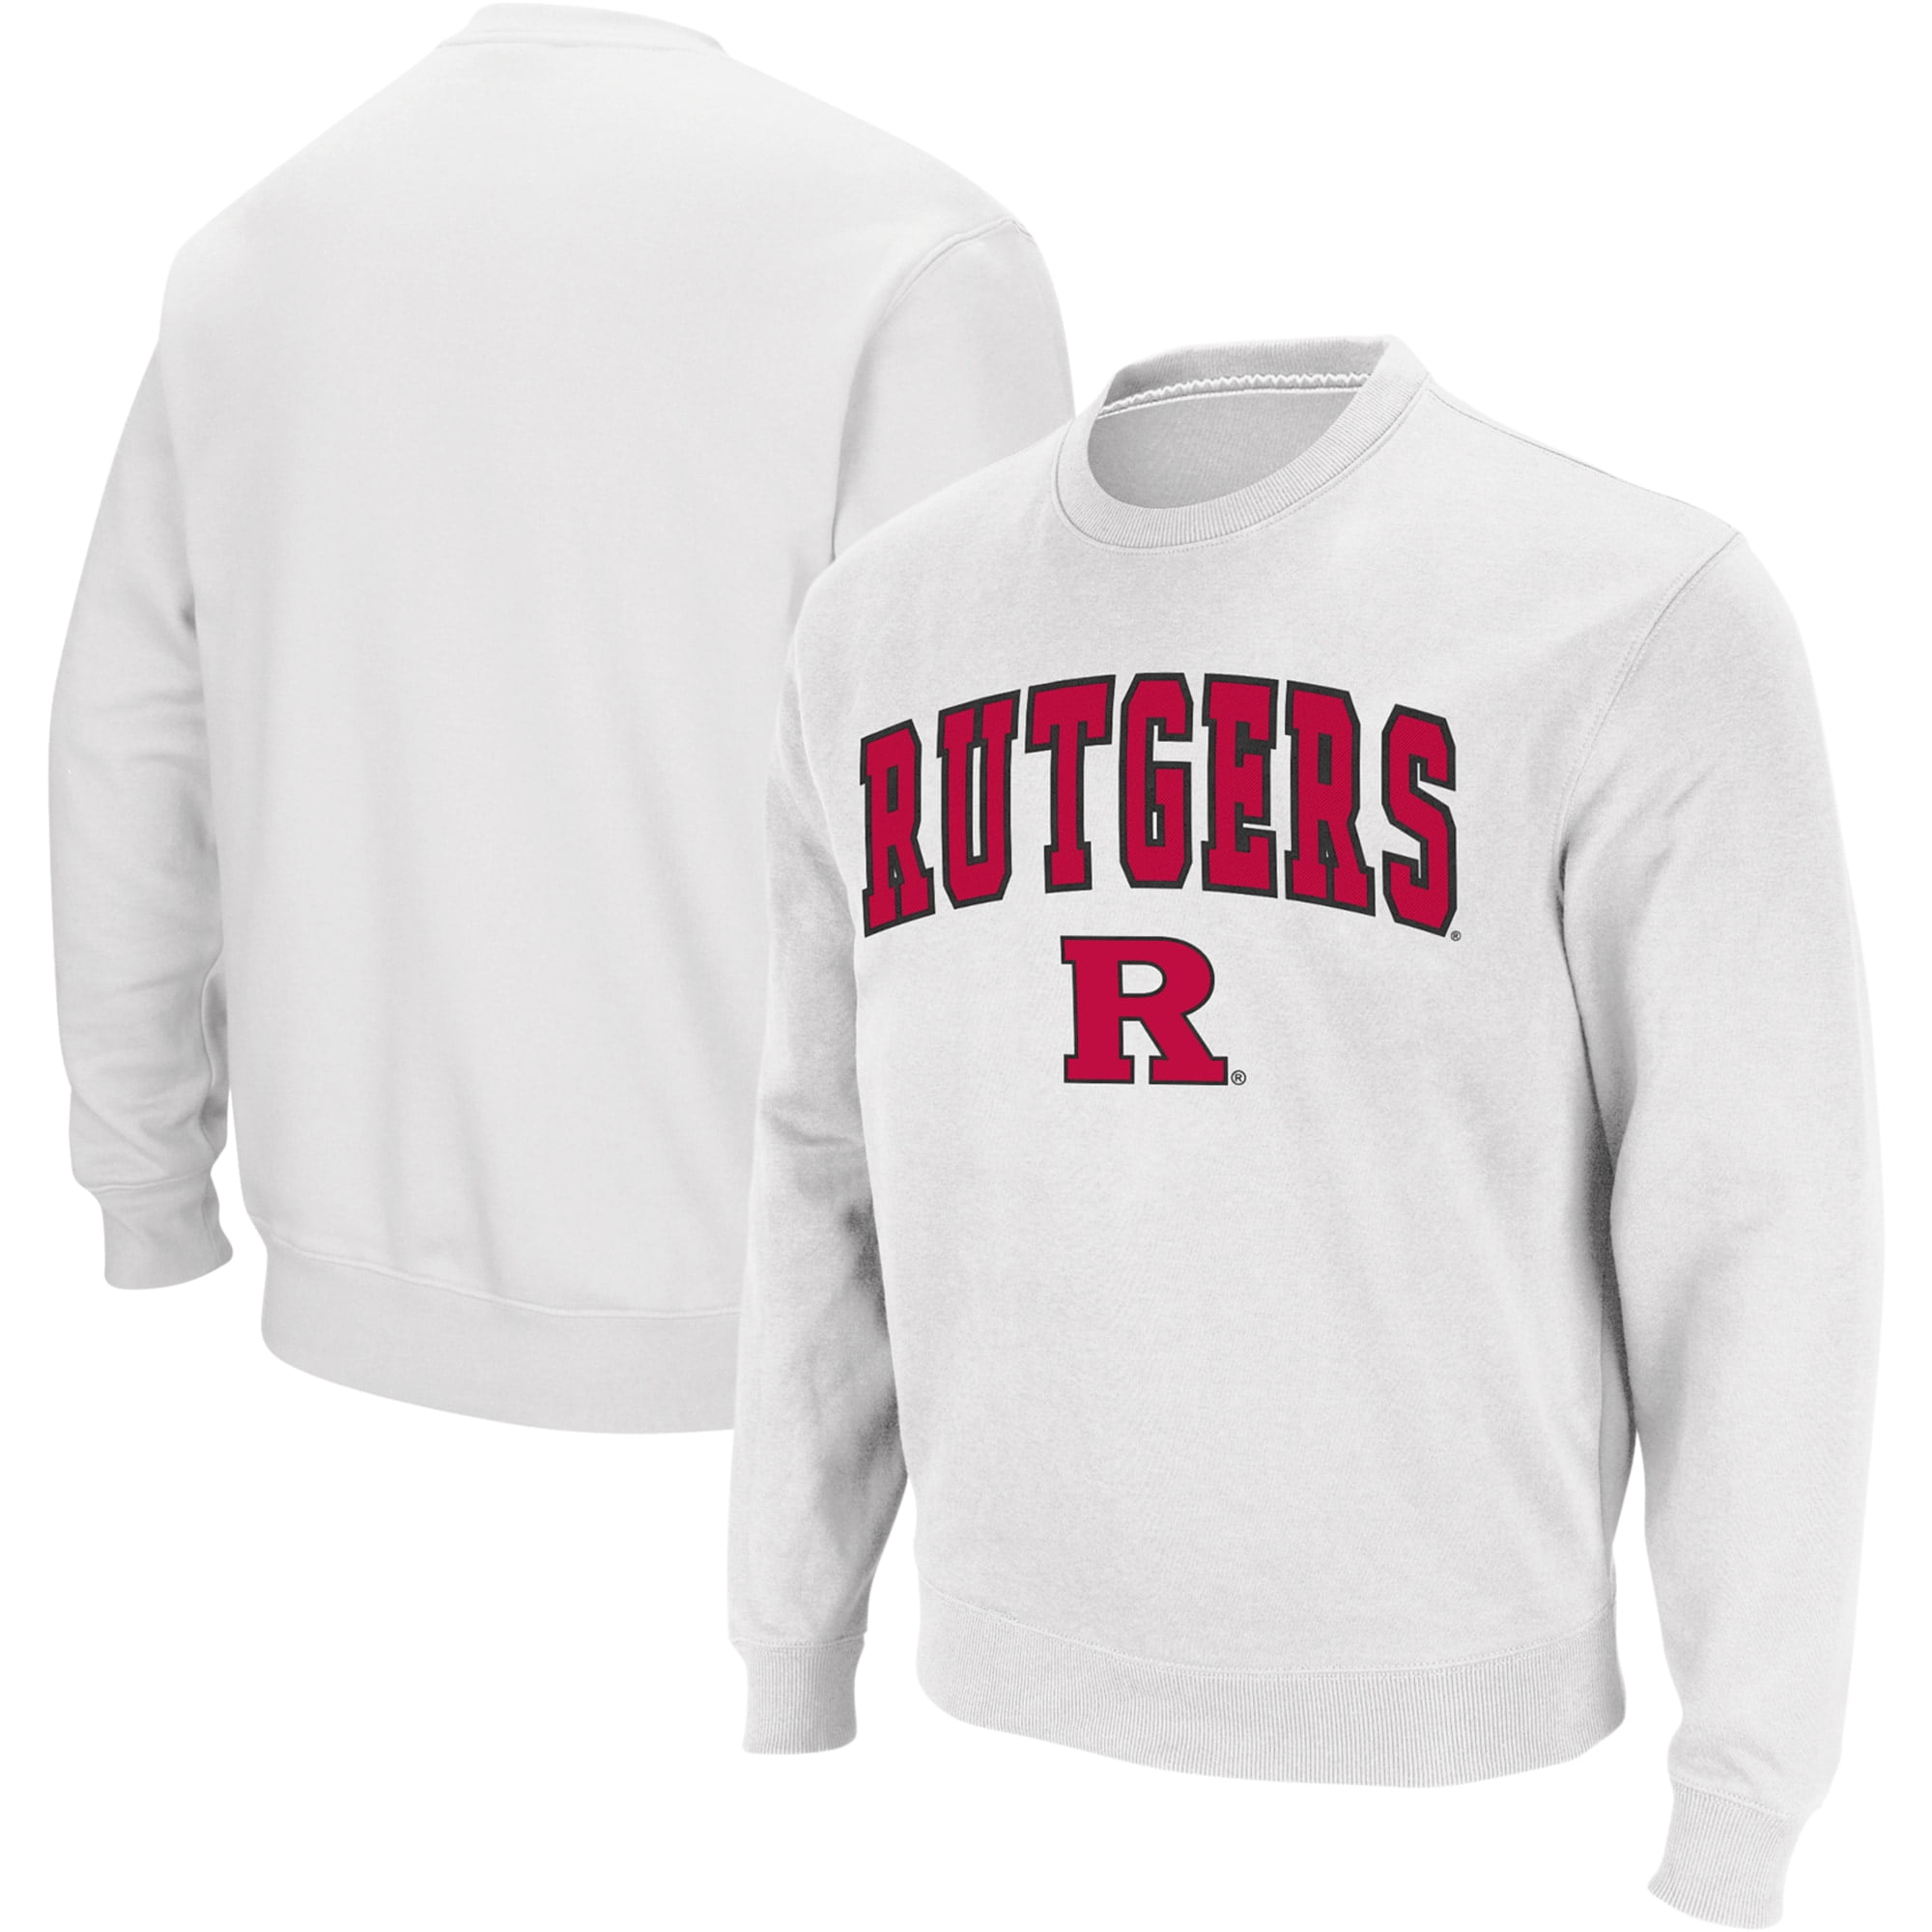 Rutgers University hardcore